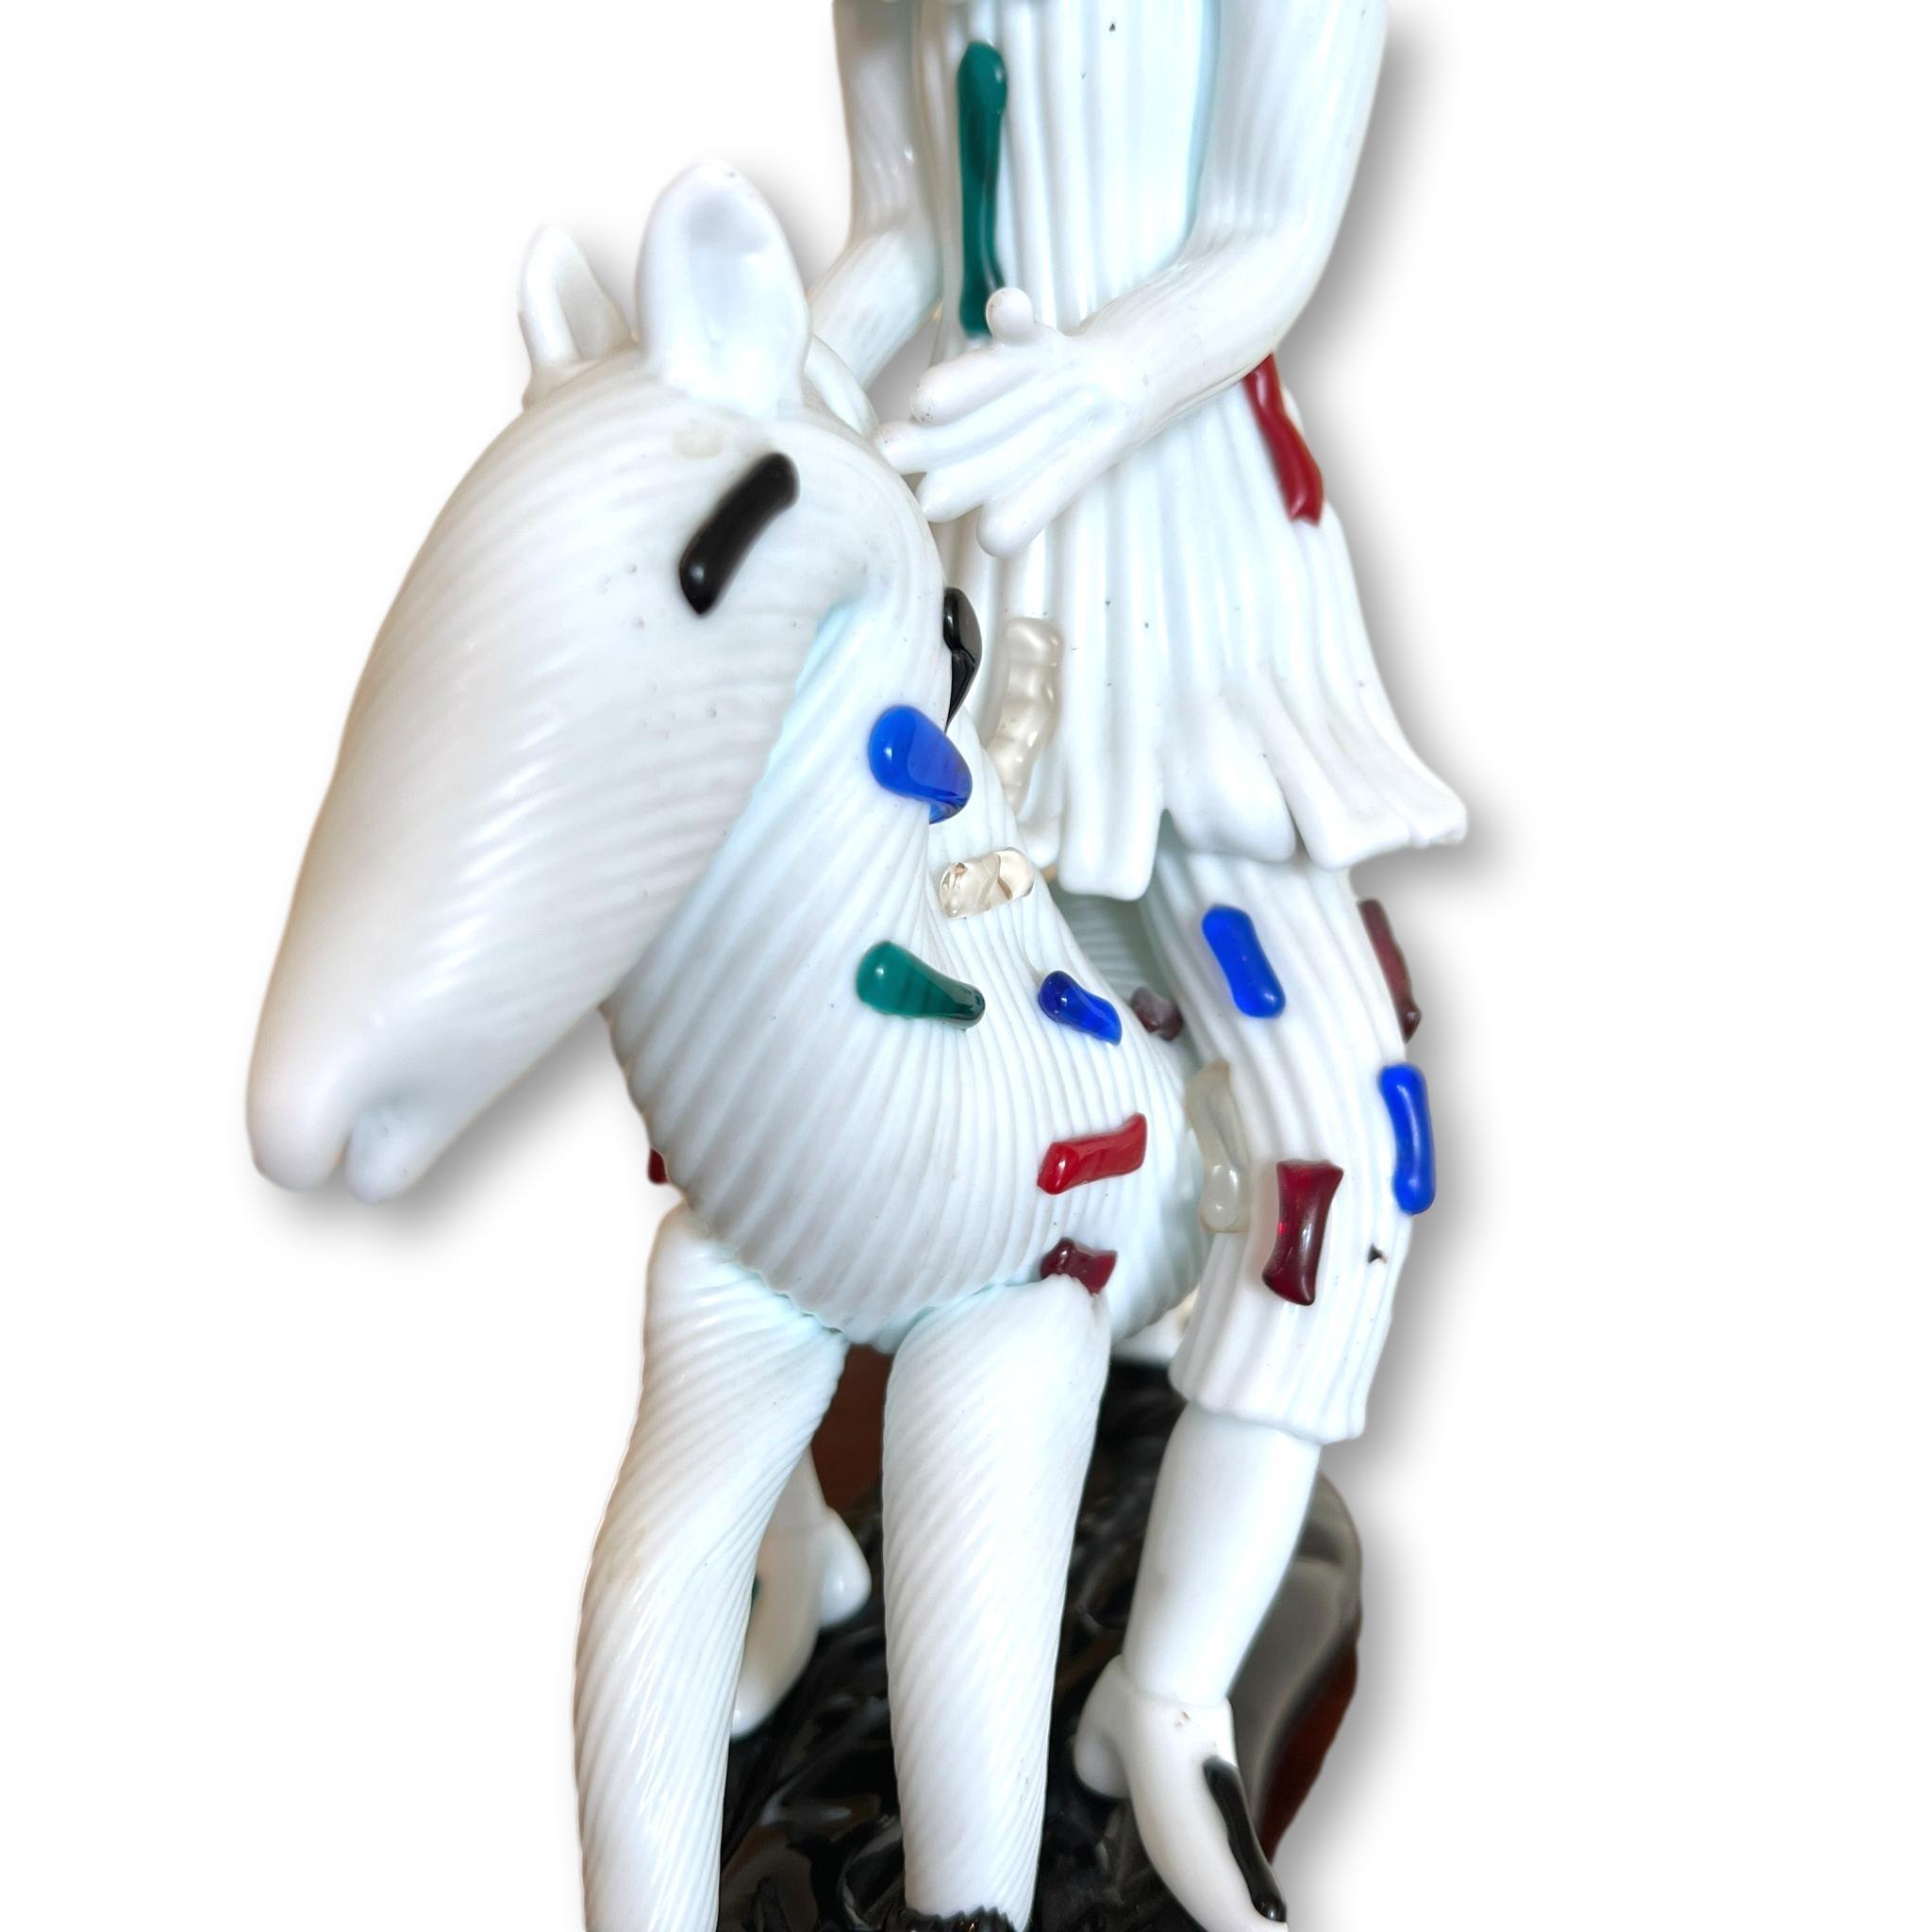 Vintage Murano Glass Figurine of Man on Horseback